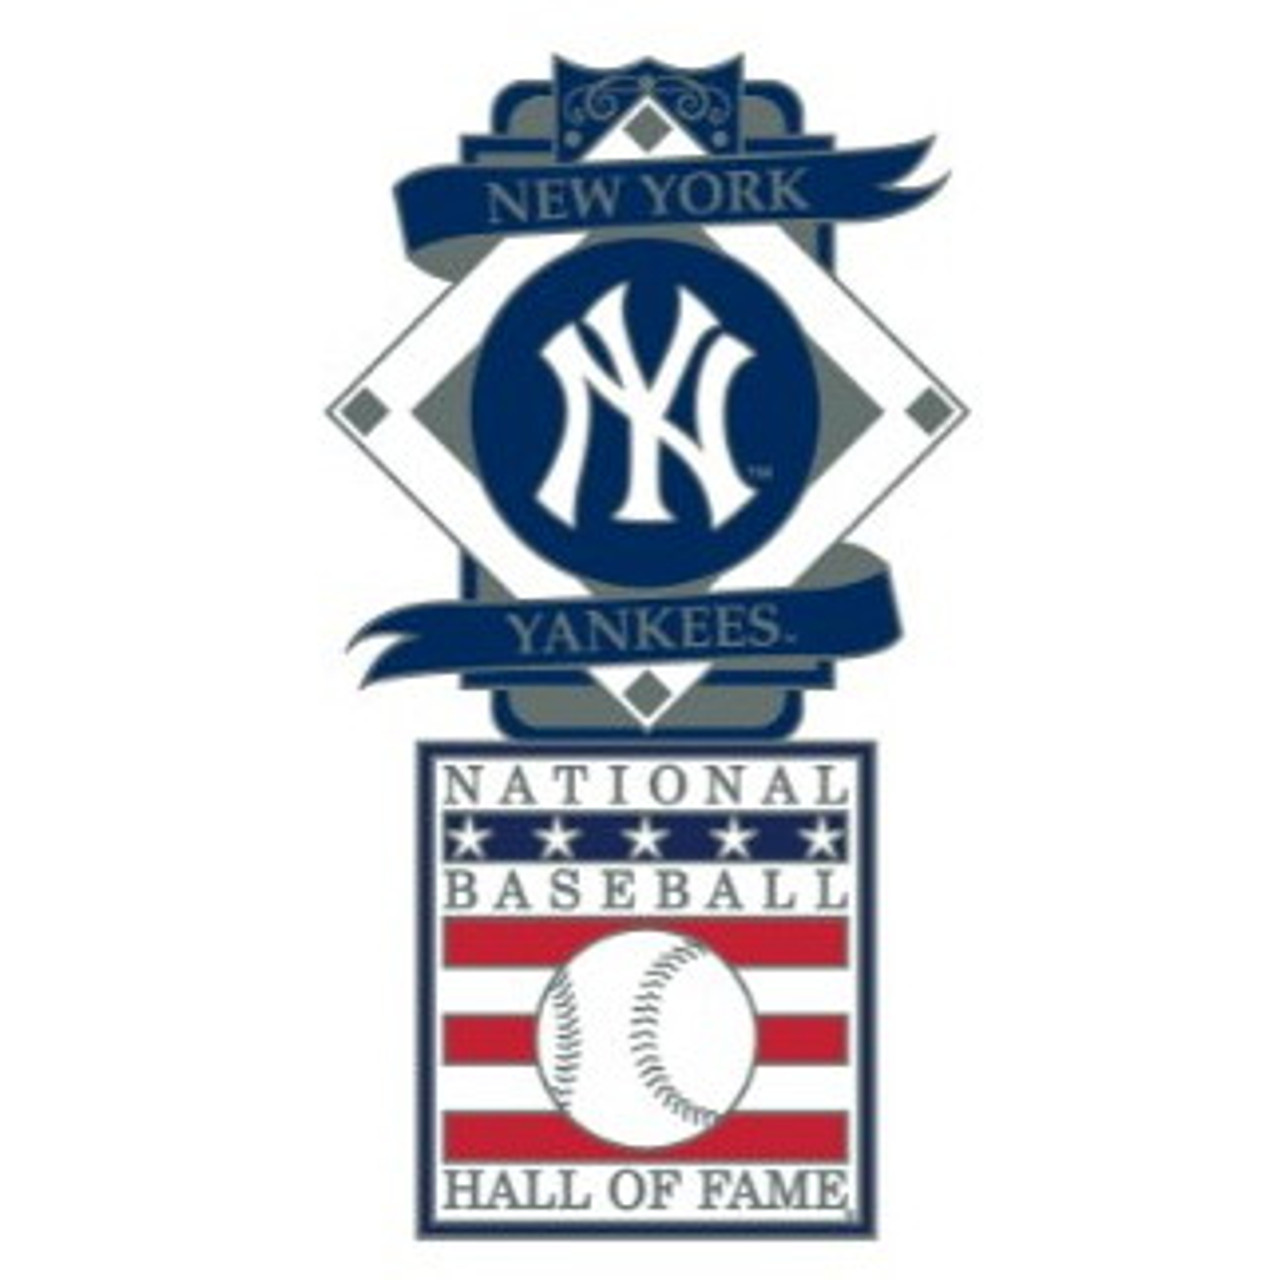 Official New York Yankees Golf Apparel & Accessories, Yankees Collection,  Yankees Golf Apparel & Accessories Gear